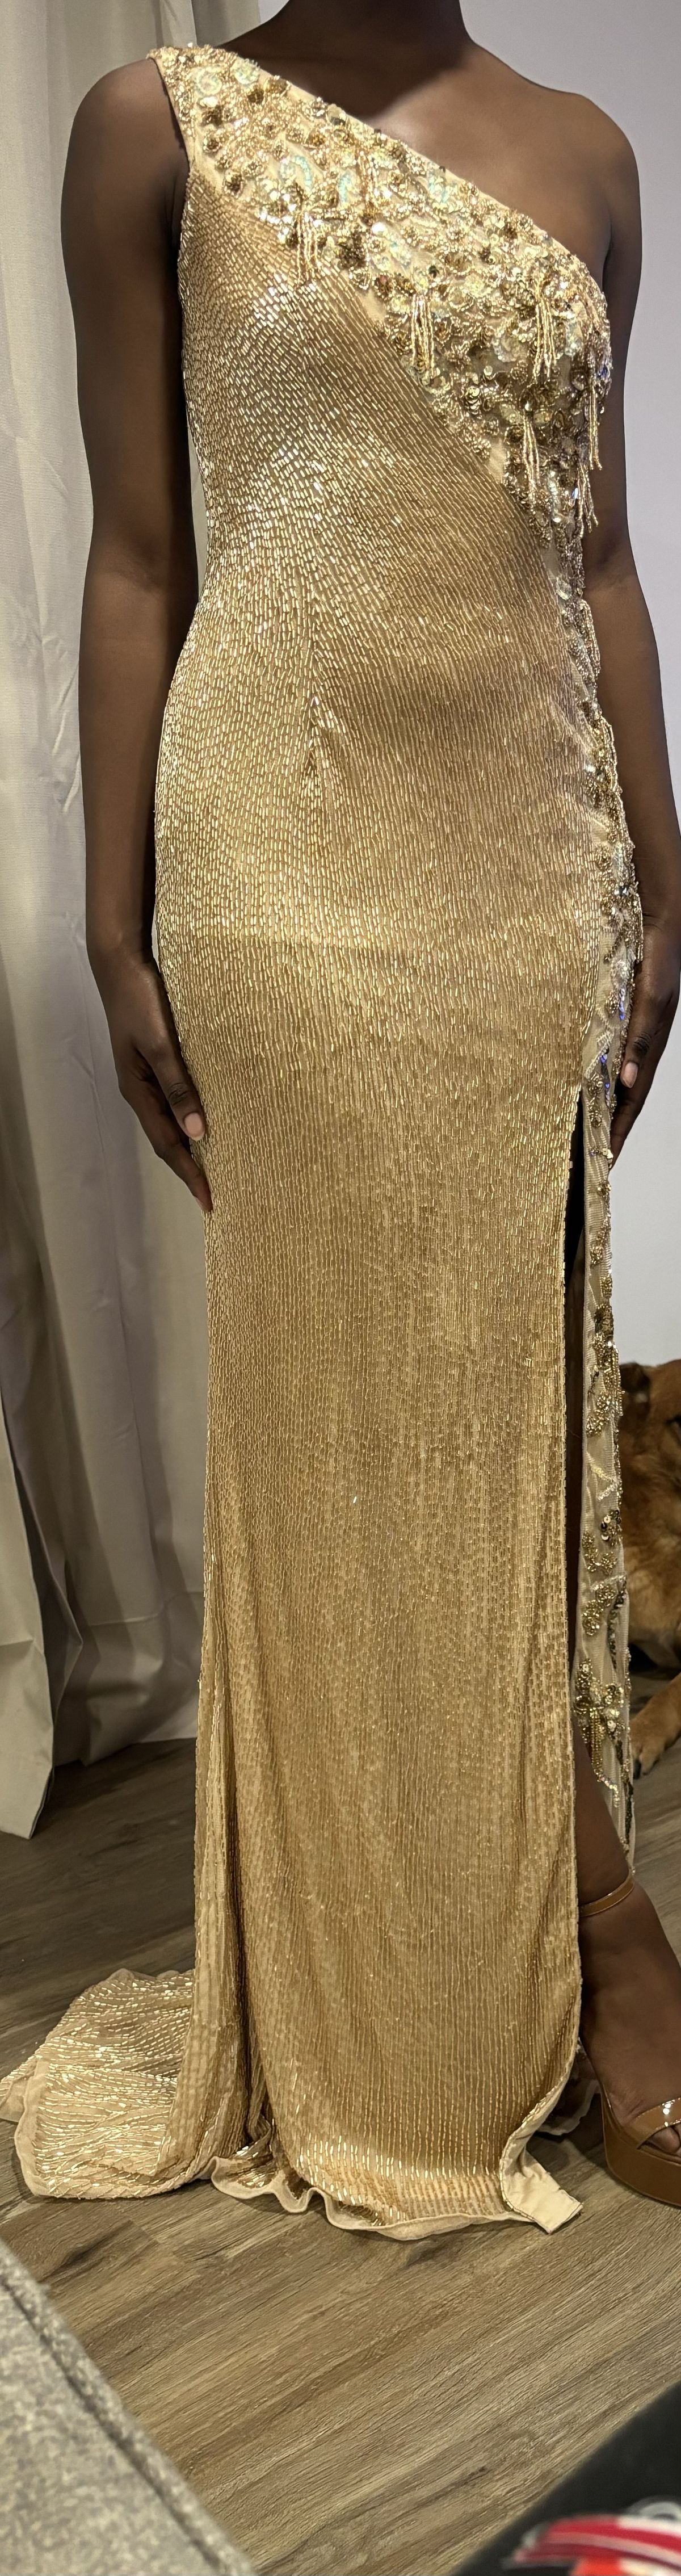 Style 94035 Amarra Size 0 Prom One Shoulder Gold Side Slit Dress on Queenly